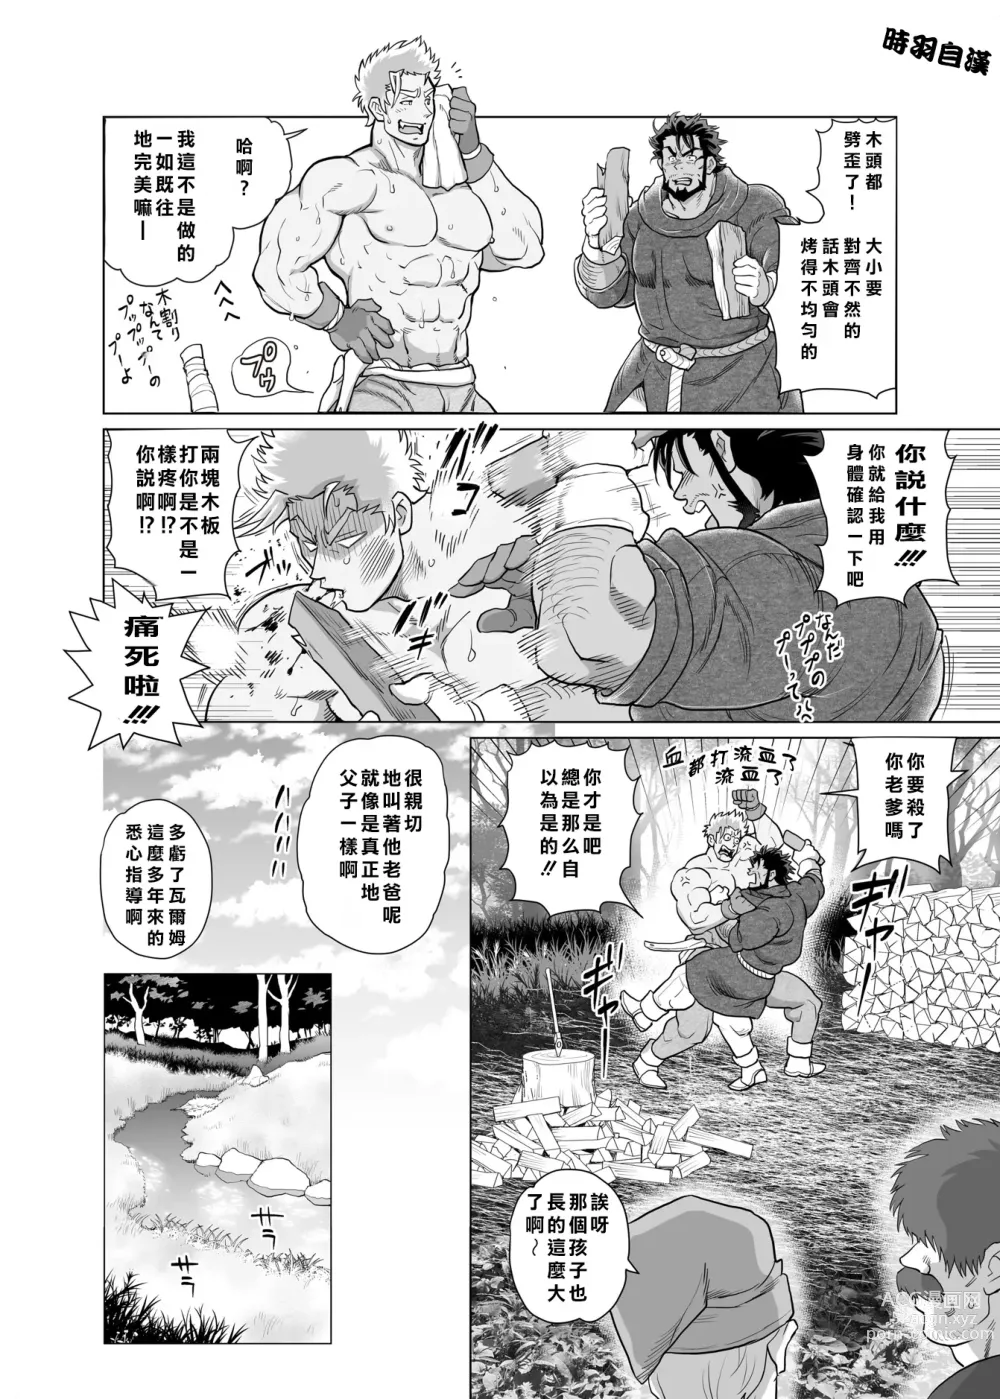 Page 6 of manga 茶柱立吉炭焼き親父は夜の森で鳴かされる